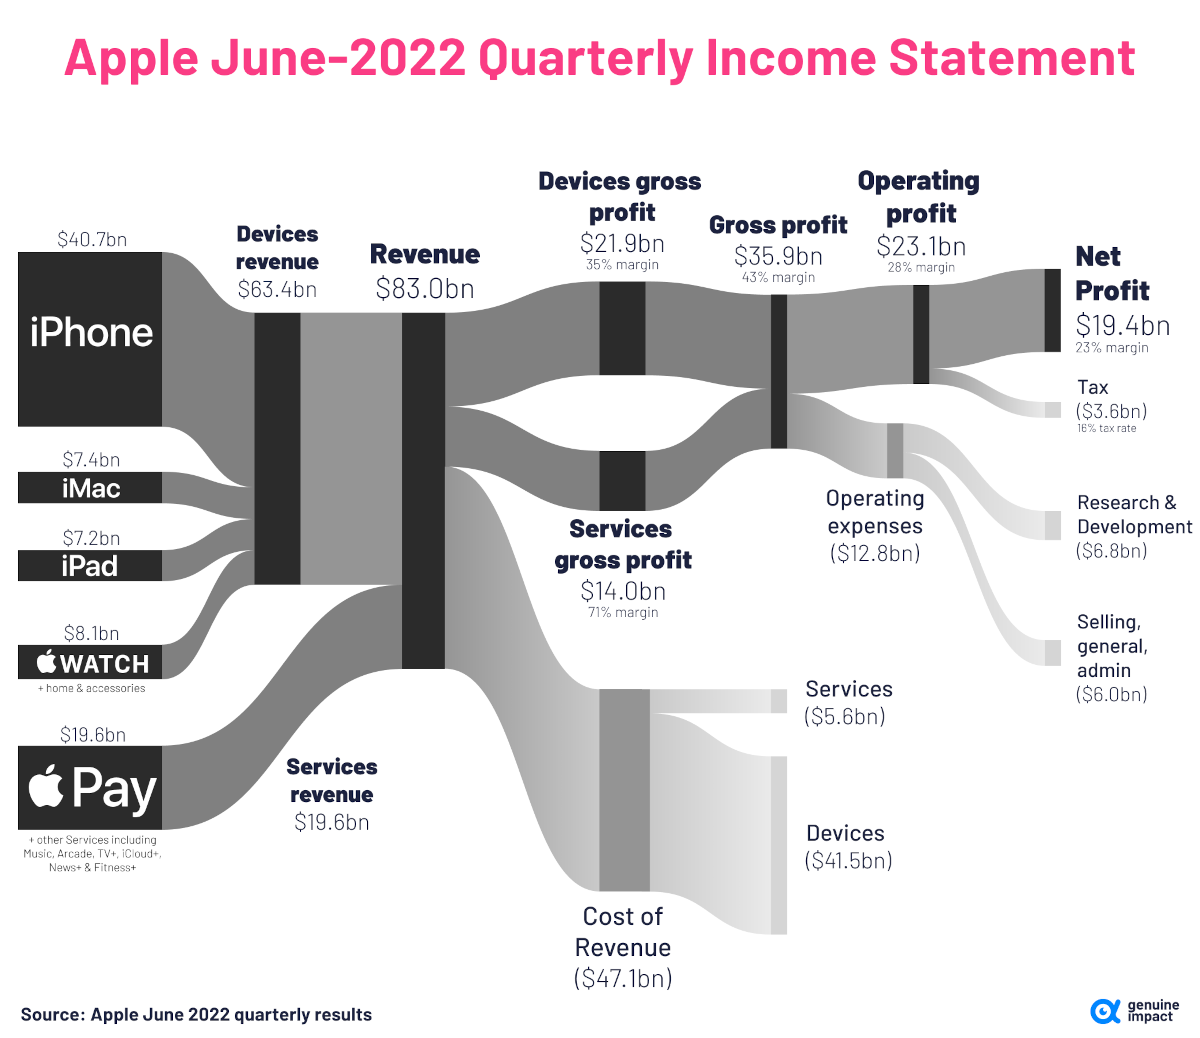 breakdown of Apple's revenue streams and profit